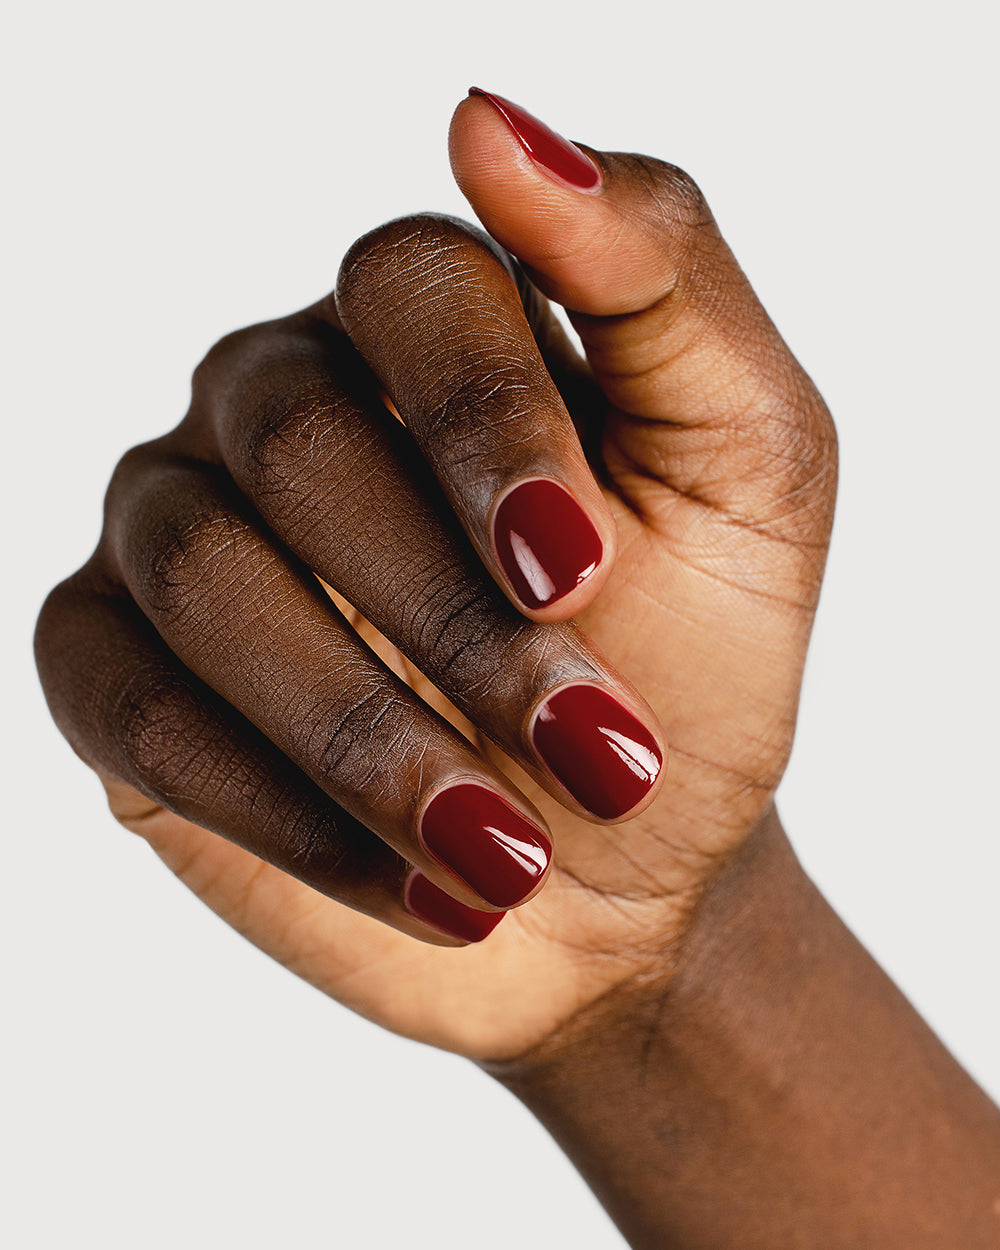 Organic mid-tone red nail polish hand swatch on dark skin tone